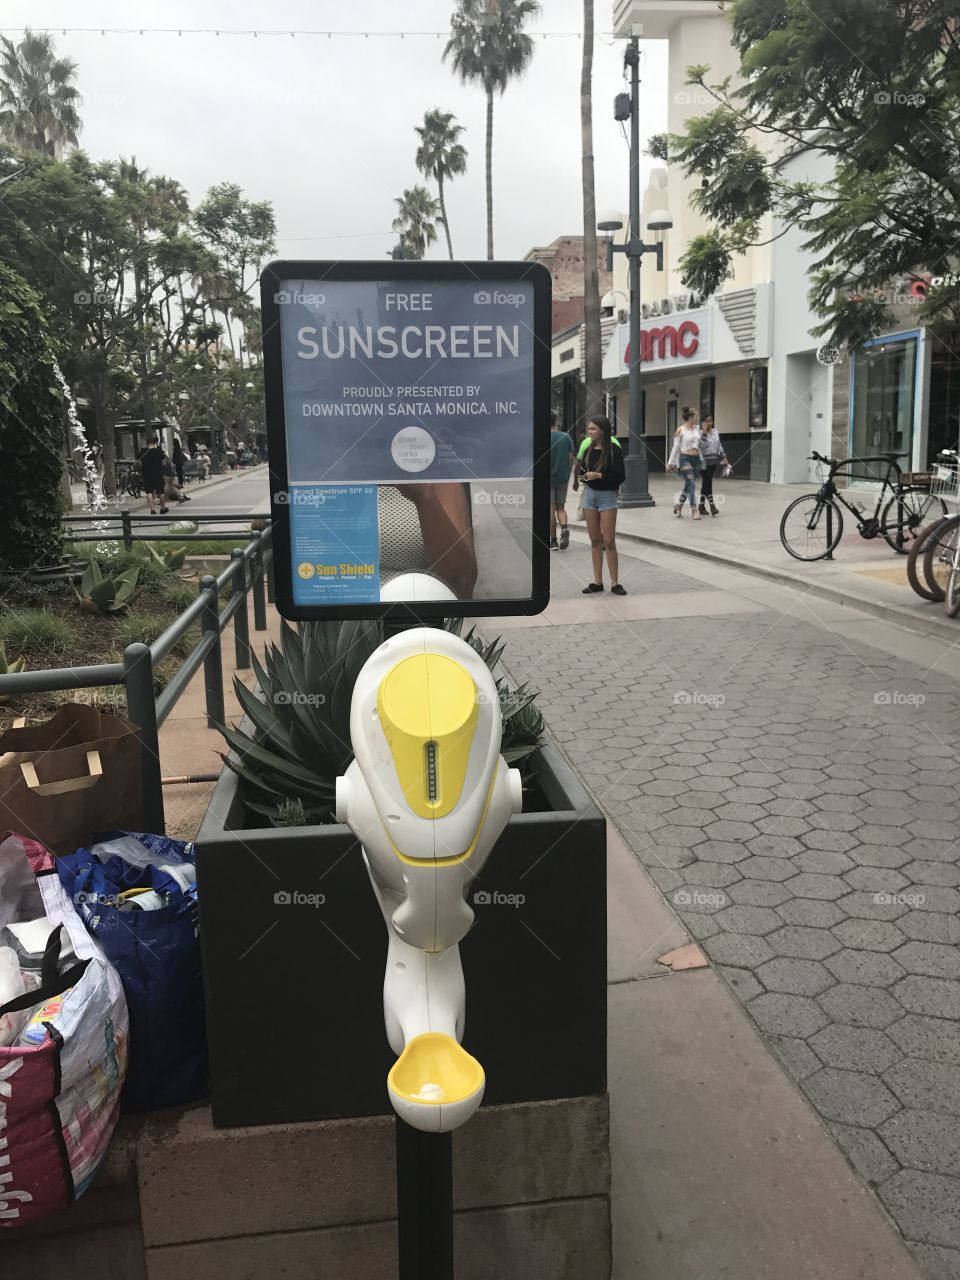 Free sunscreen 